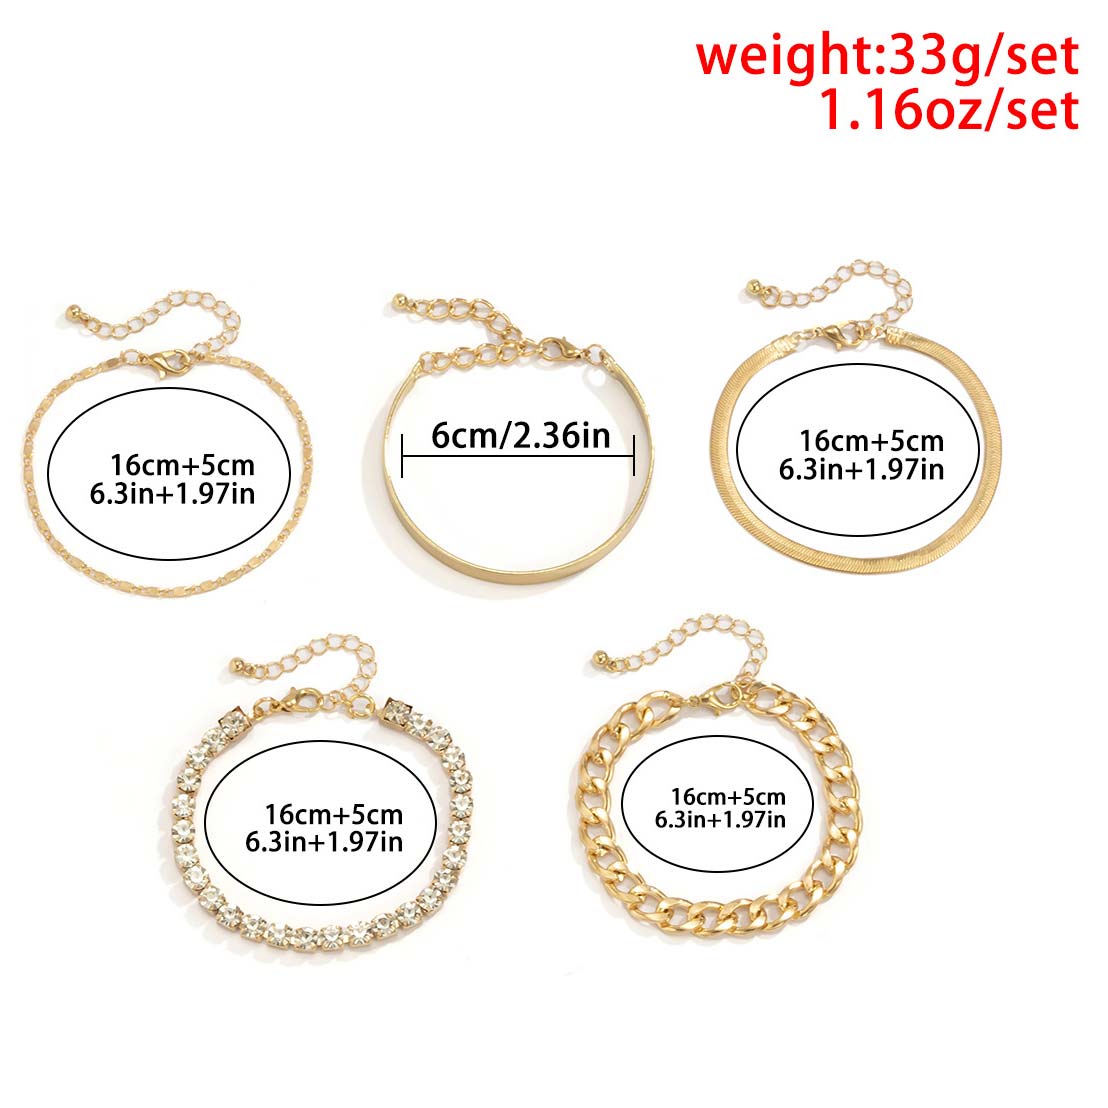 Rhinestone Chain Layered Design Gold Bracelet Set